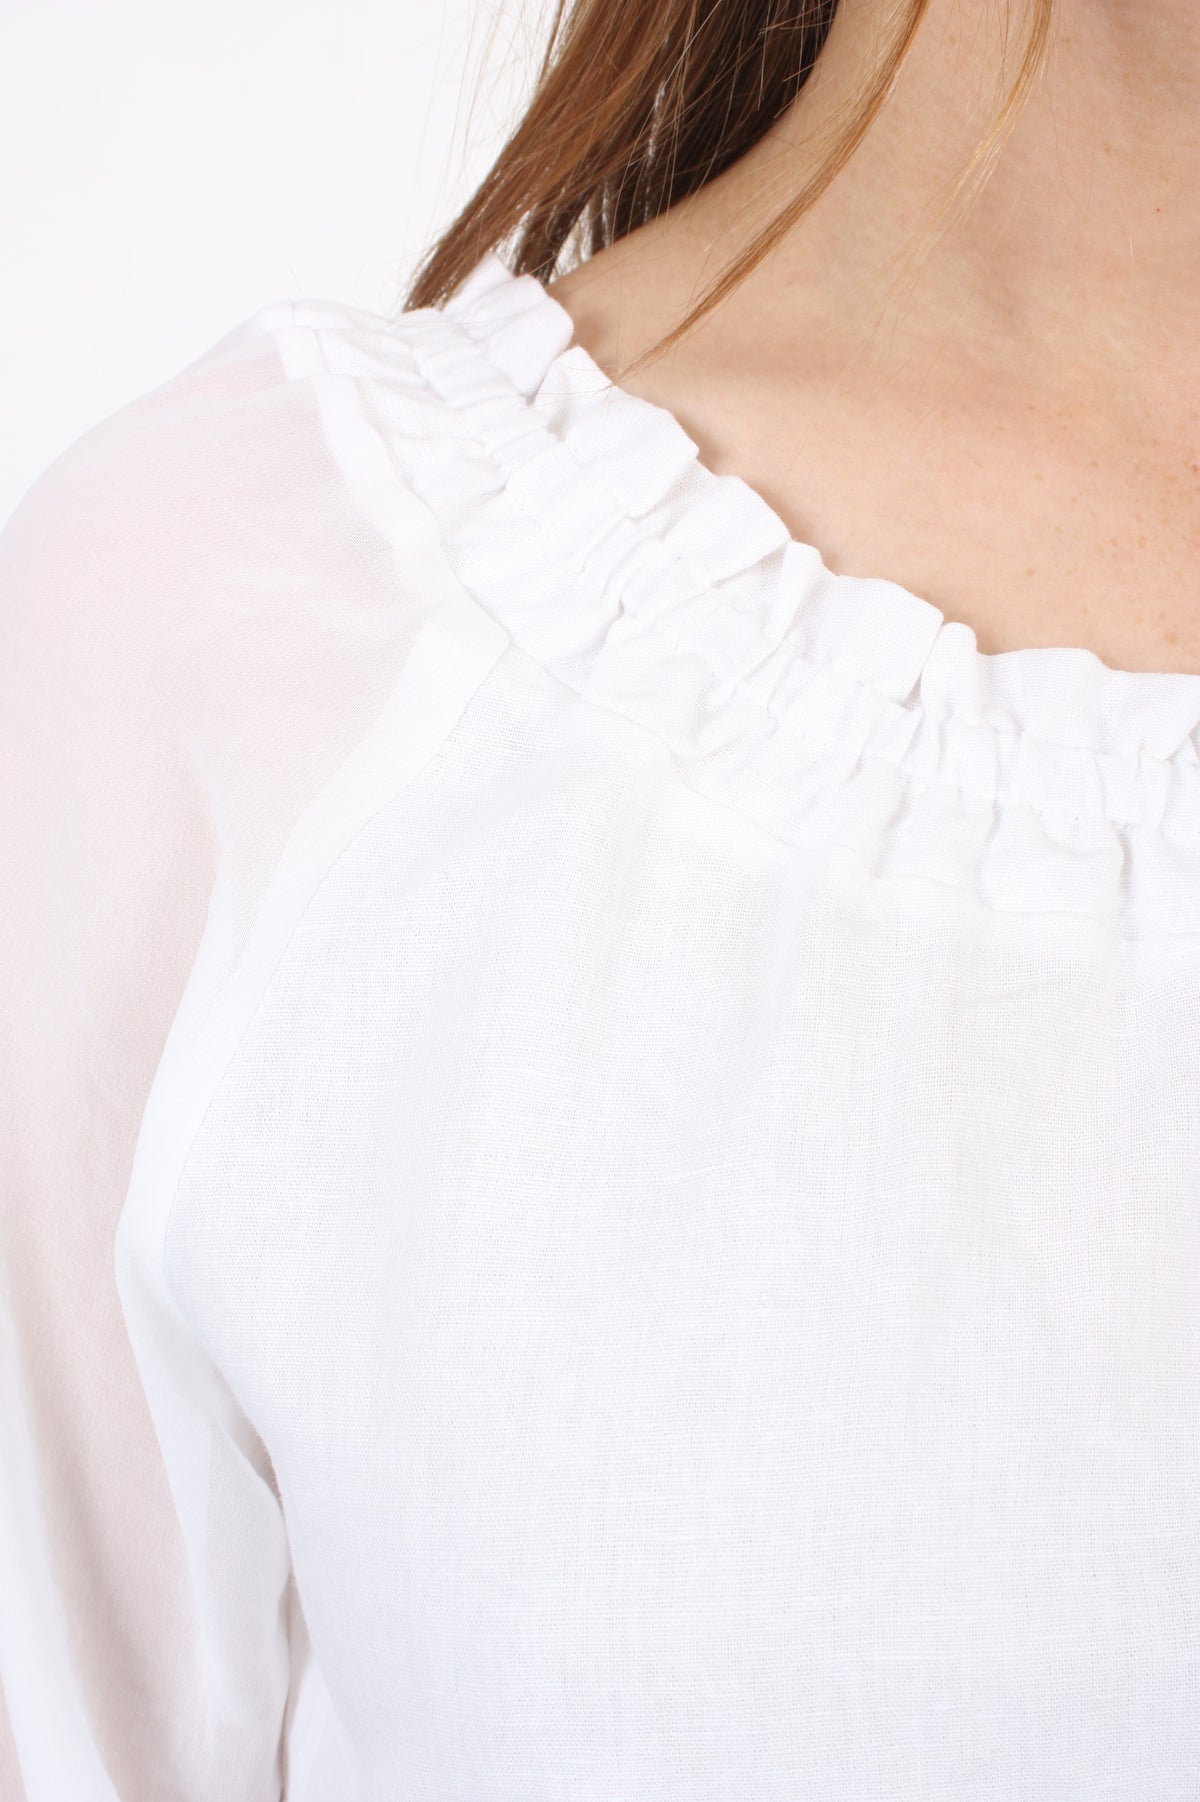 LuLu Top - White Long Sleeve